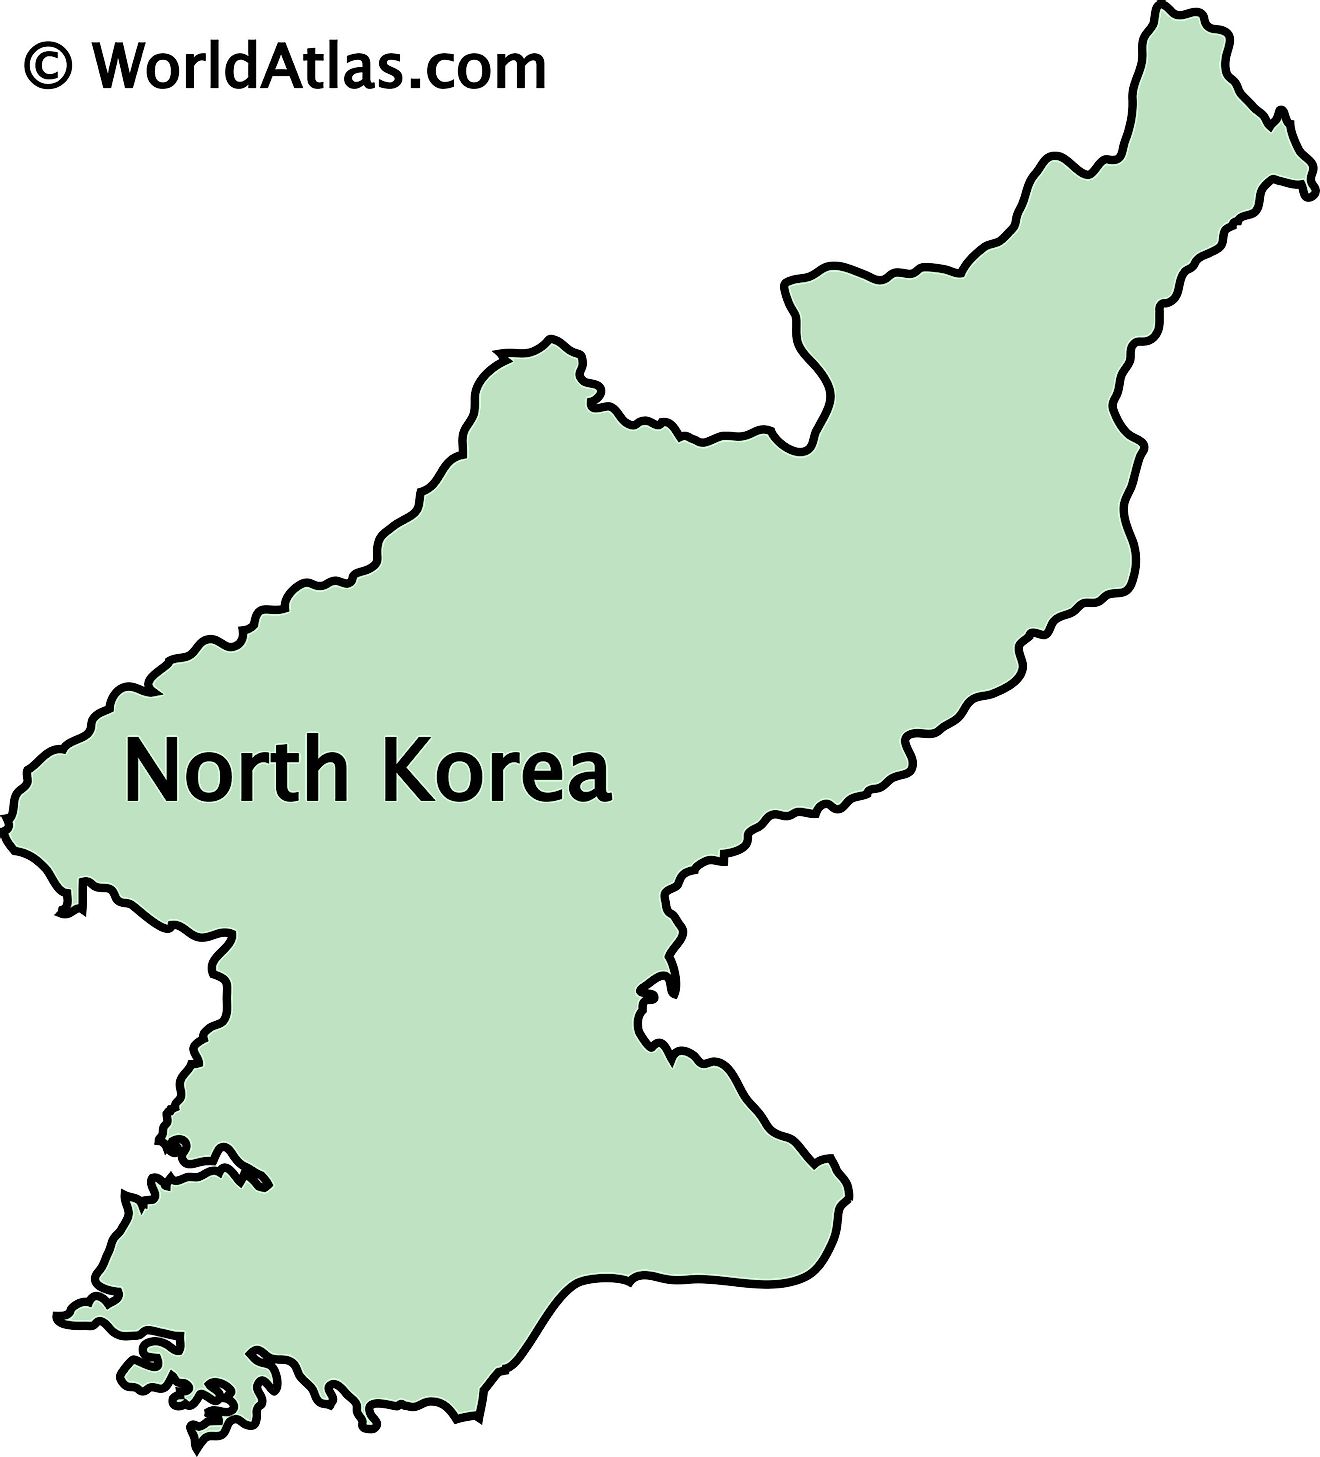 North Korea Maps & Facts - World Atlas